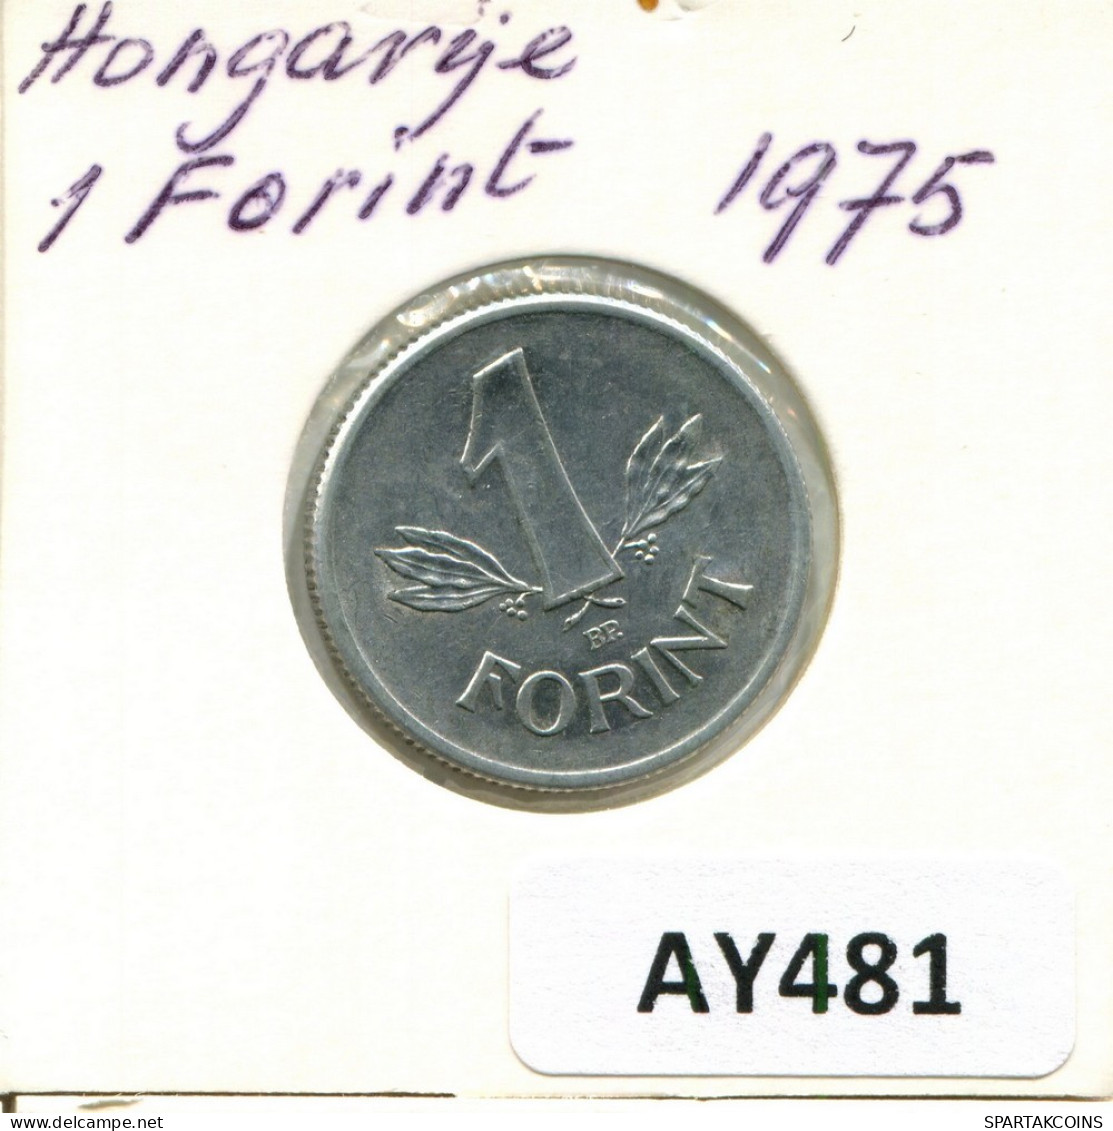 1 FORINT 1975 SIEBENBÜRGEN HUNGARY Münze #AY481.D.A - Hungary